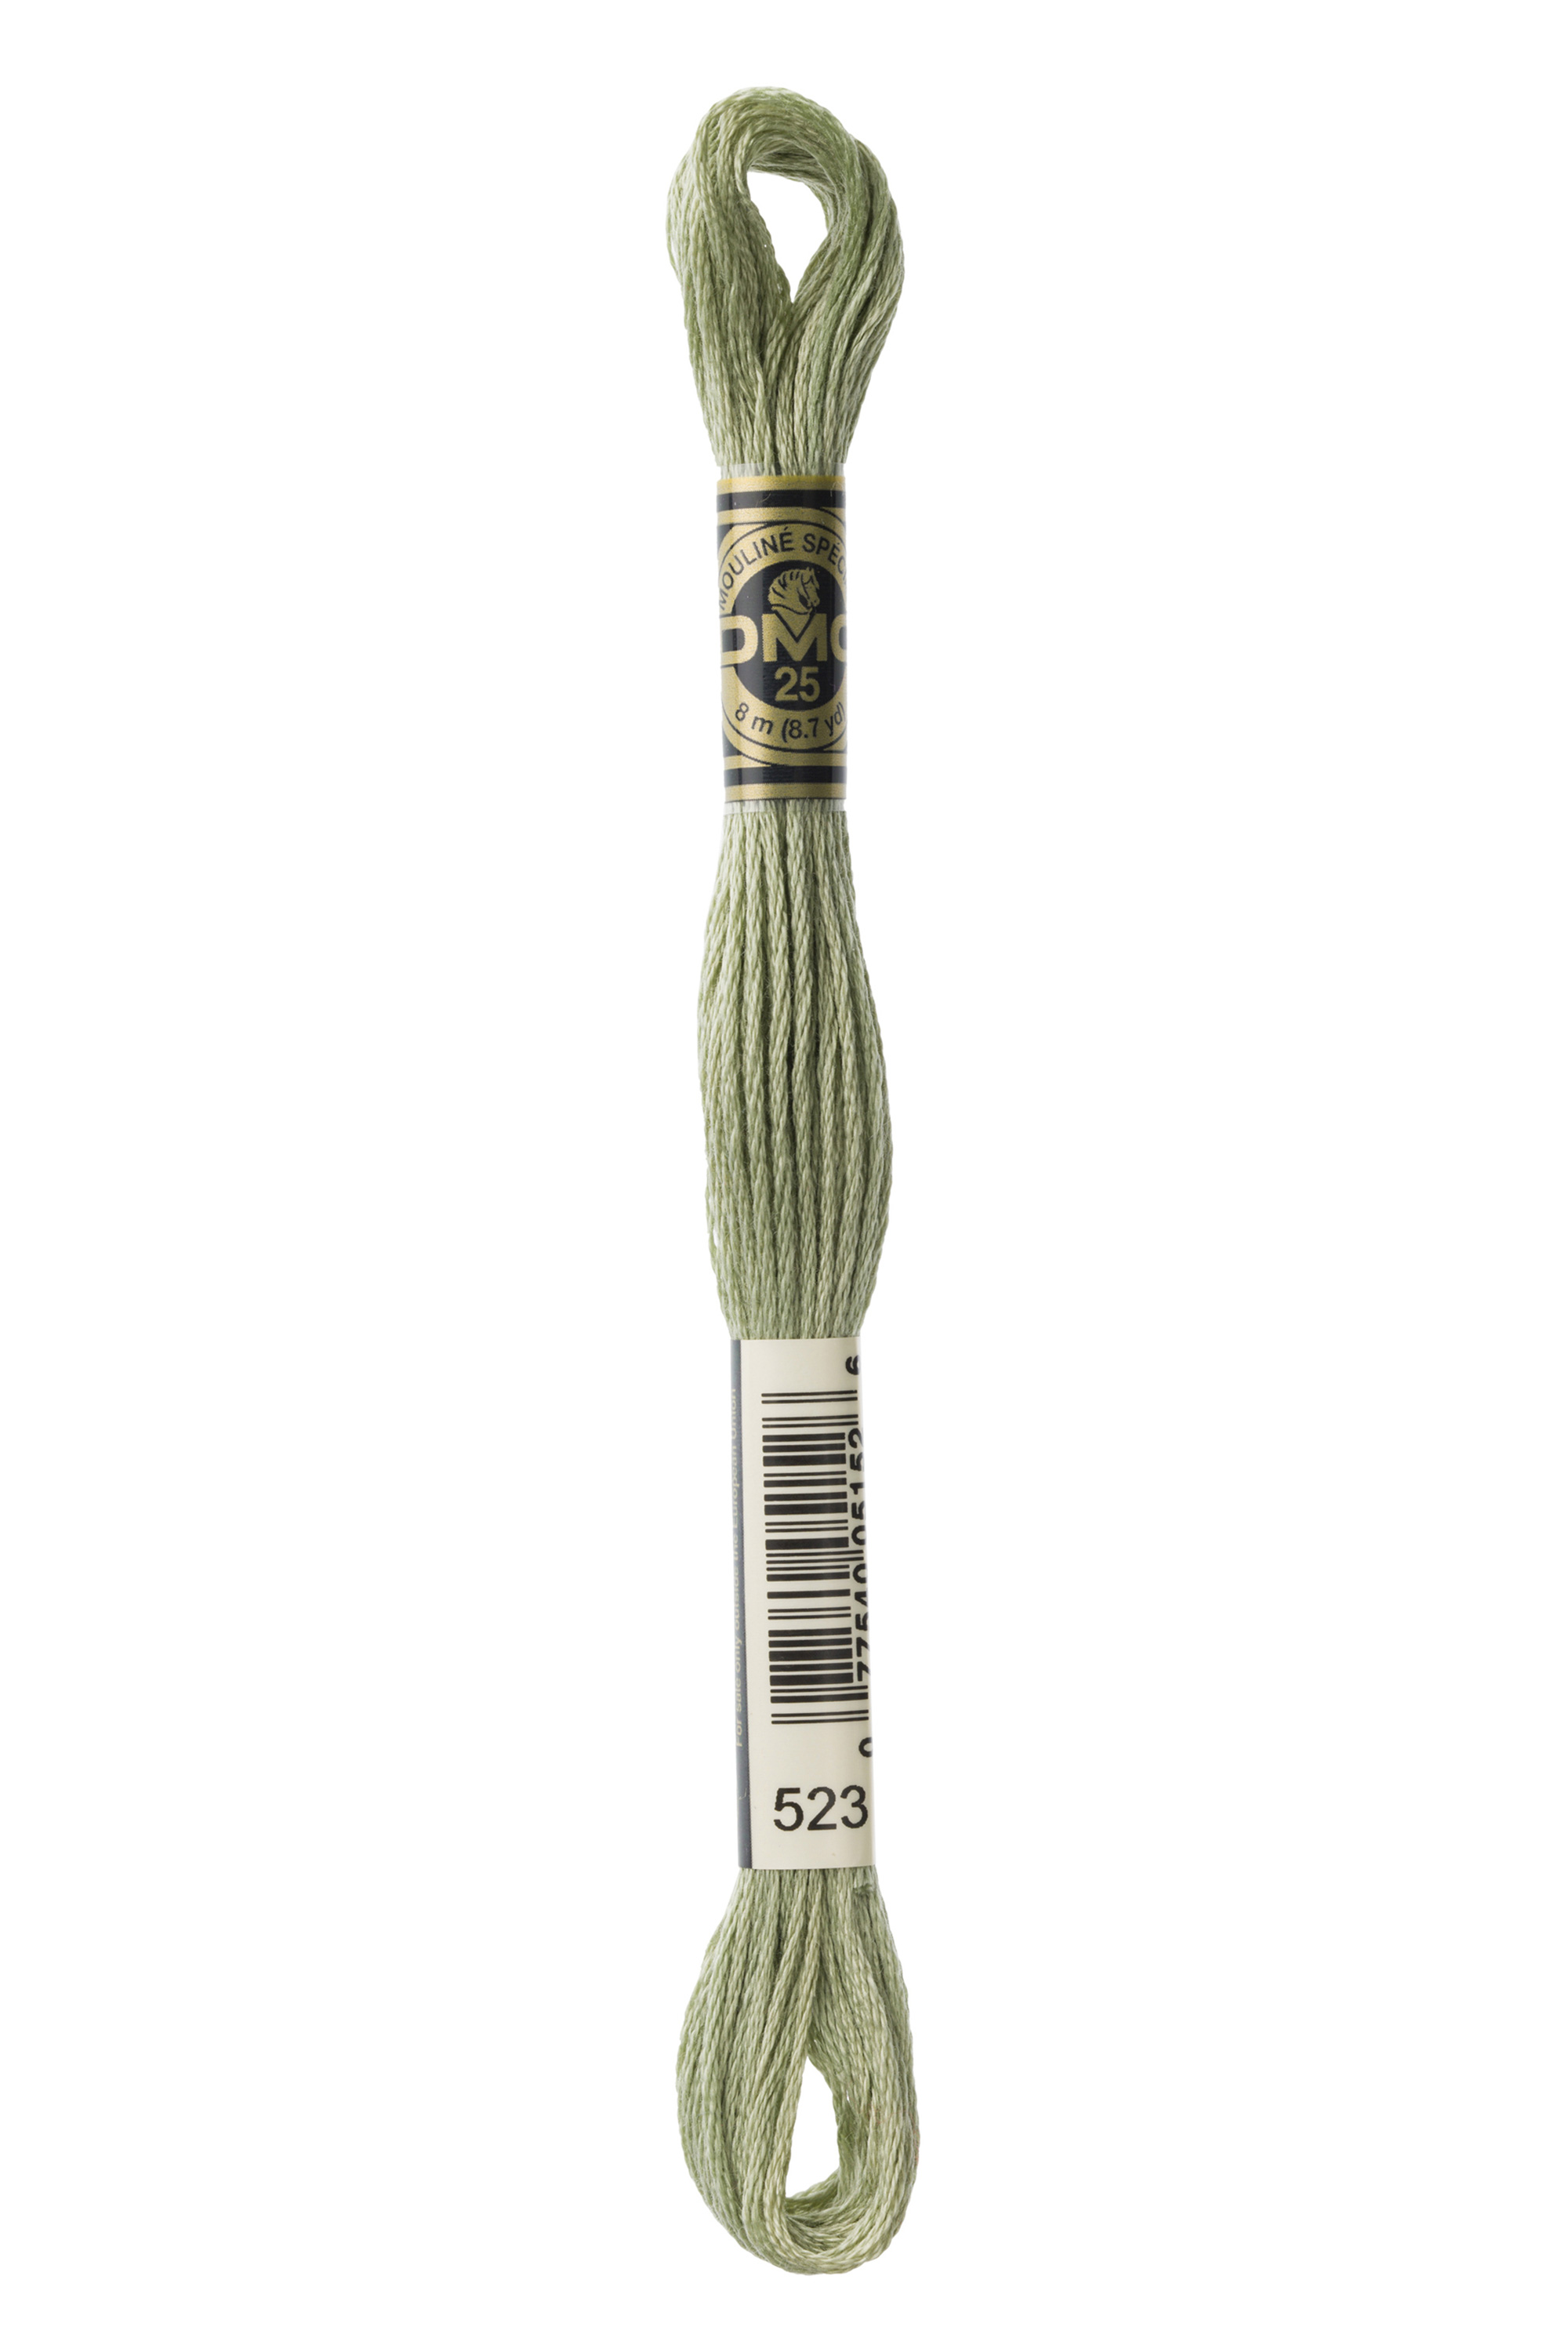 The Urban Store Embroidery Thread Light Fern Green DMC 523 RRP 1.40 CLEARANCE XL 99p